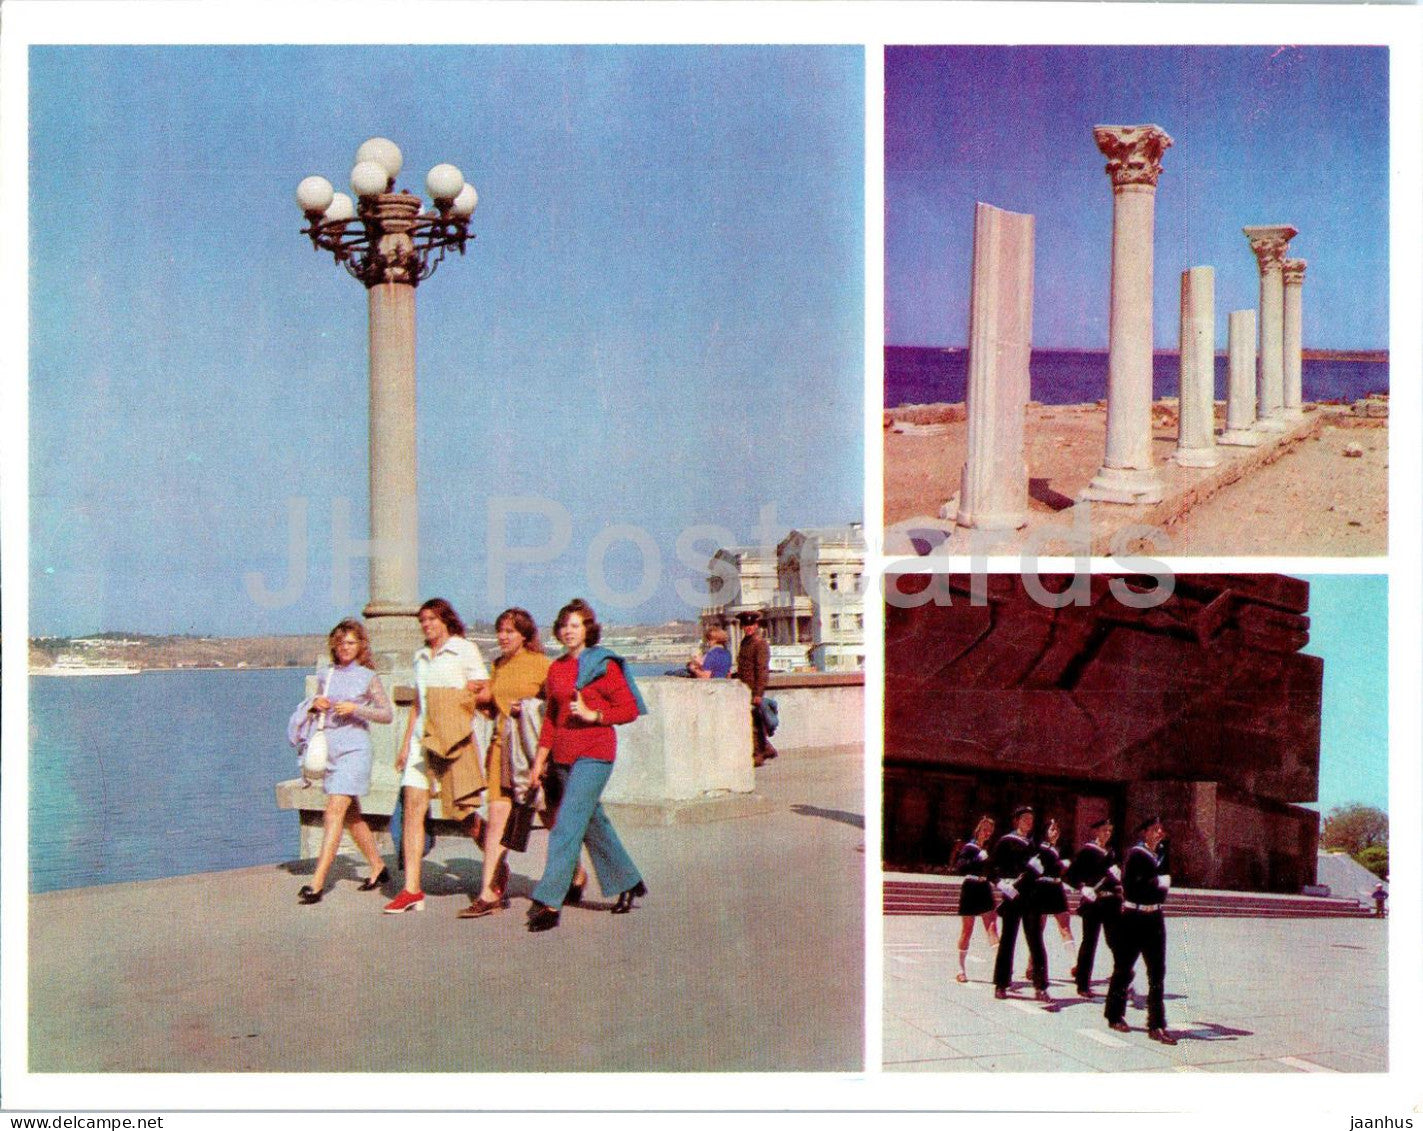 Sevastopol - Kornilov embankment - Ruins of the ancient city Chersonesos - Crimea - 1977 - Ukraine USSR - unused - JH Postcards